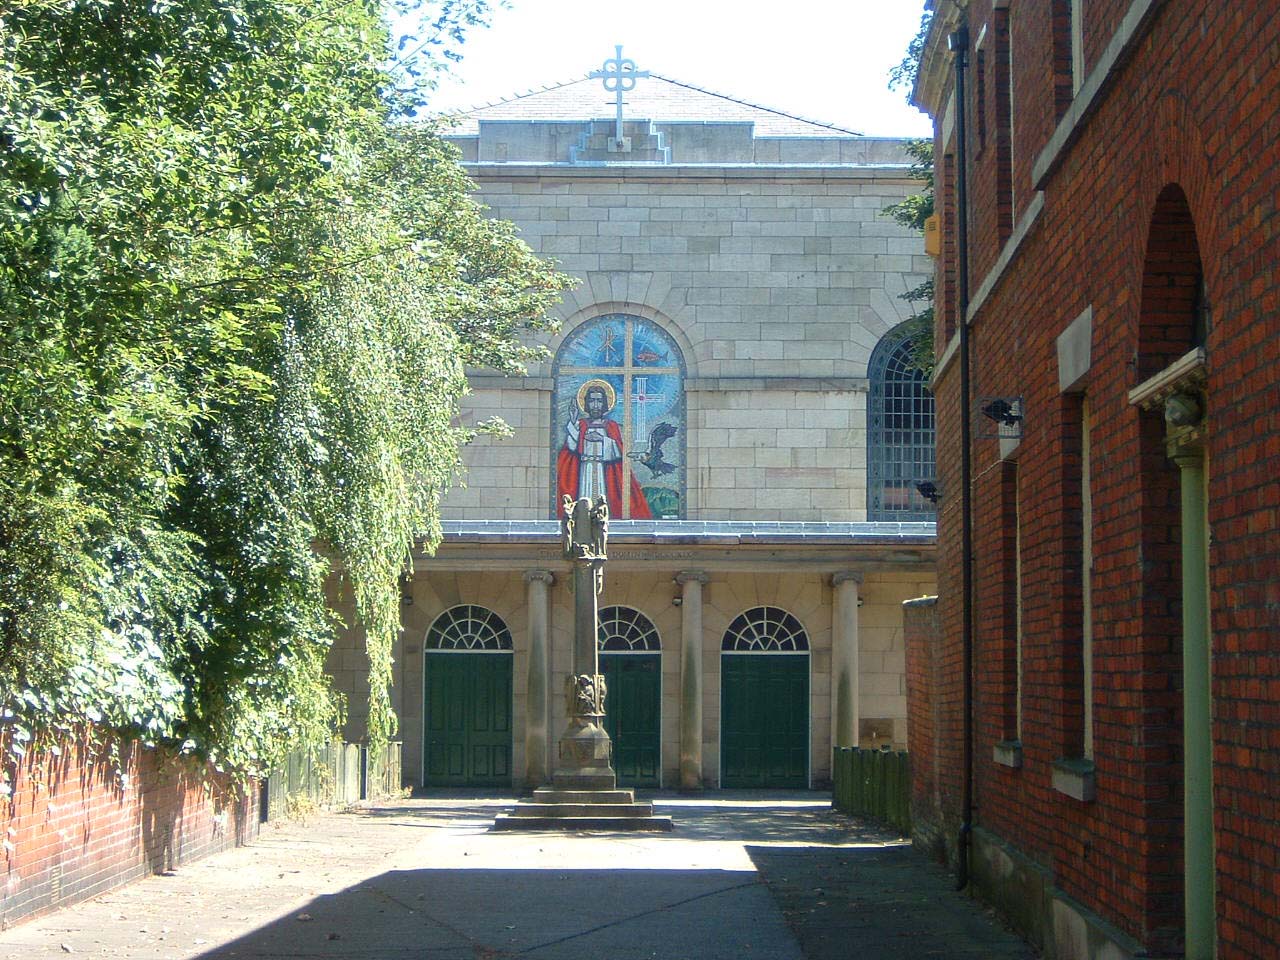 The Roman Catholic Church of St John, Wigan